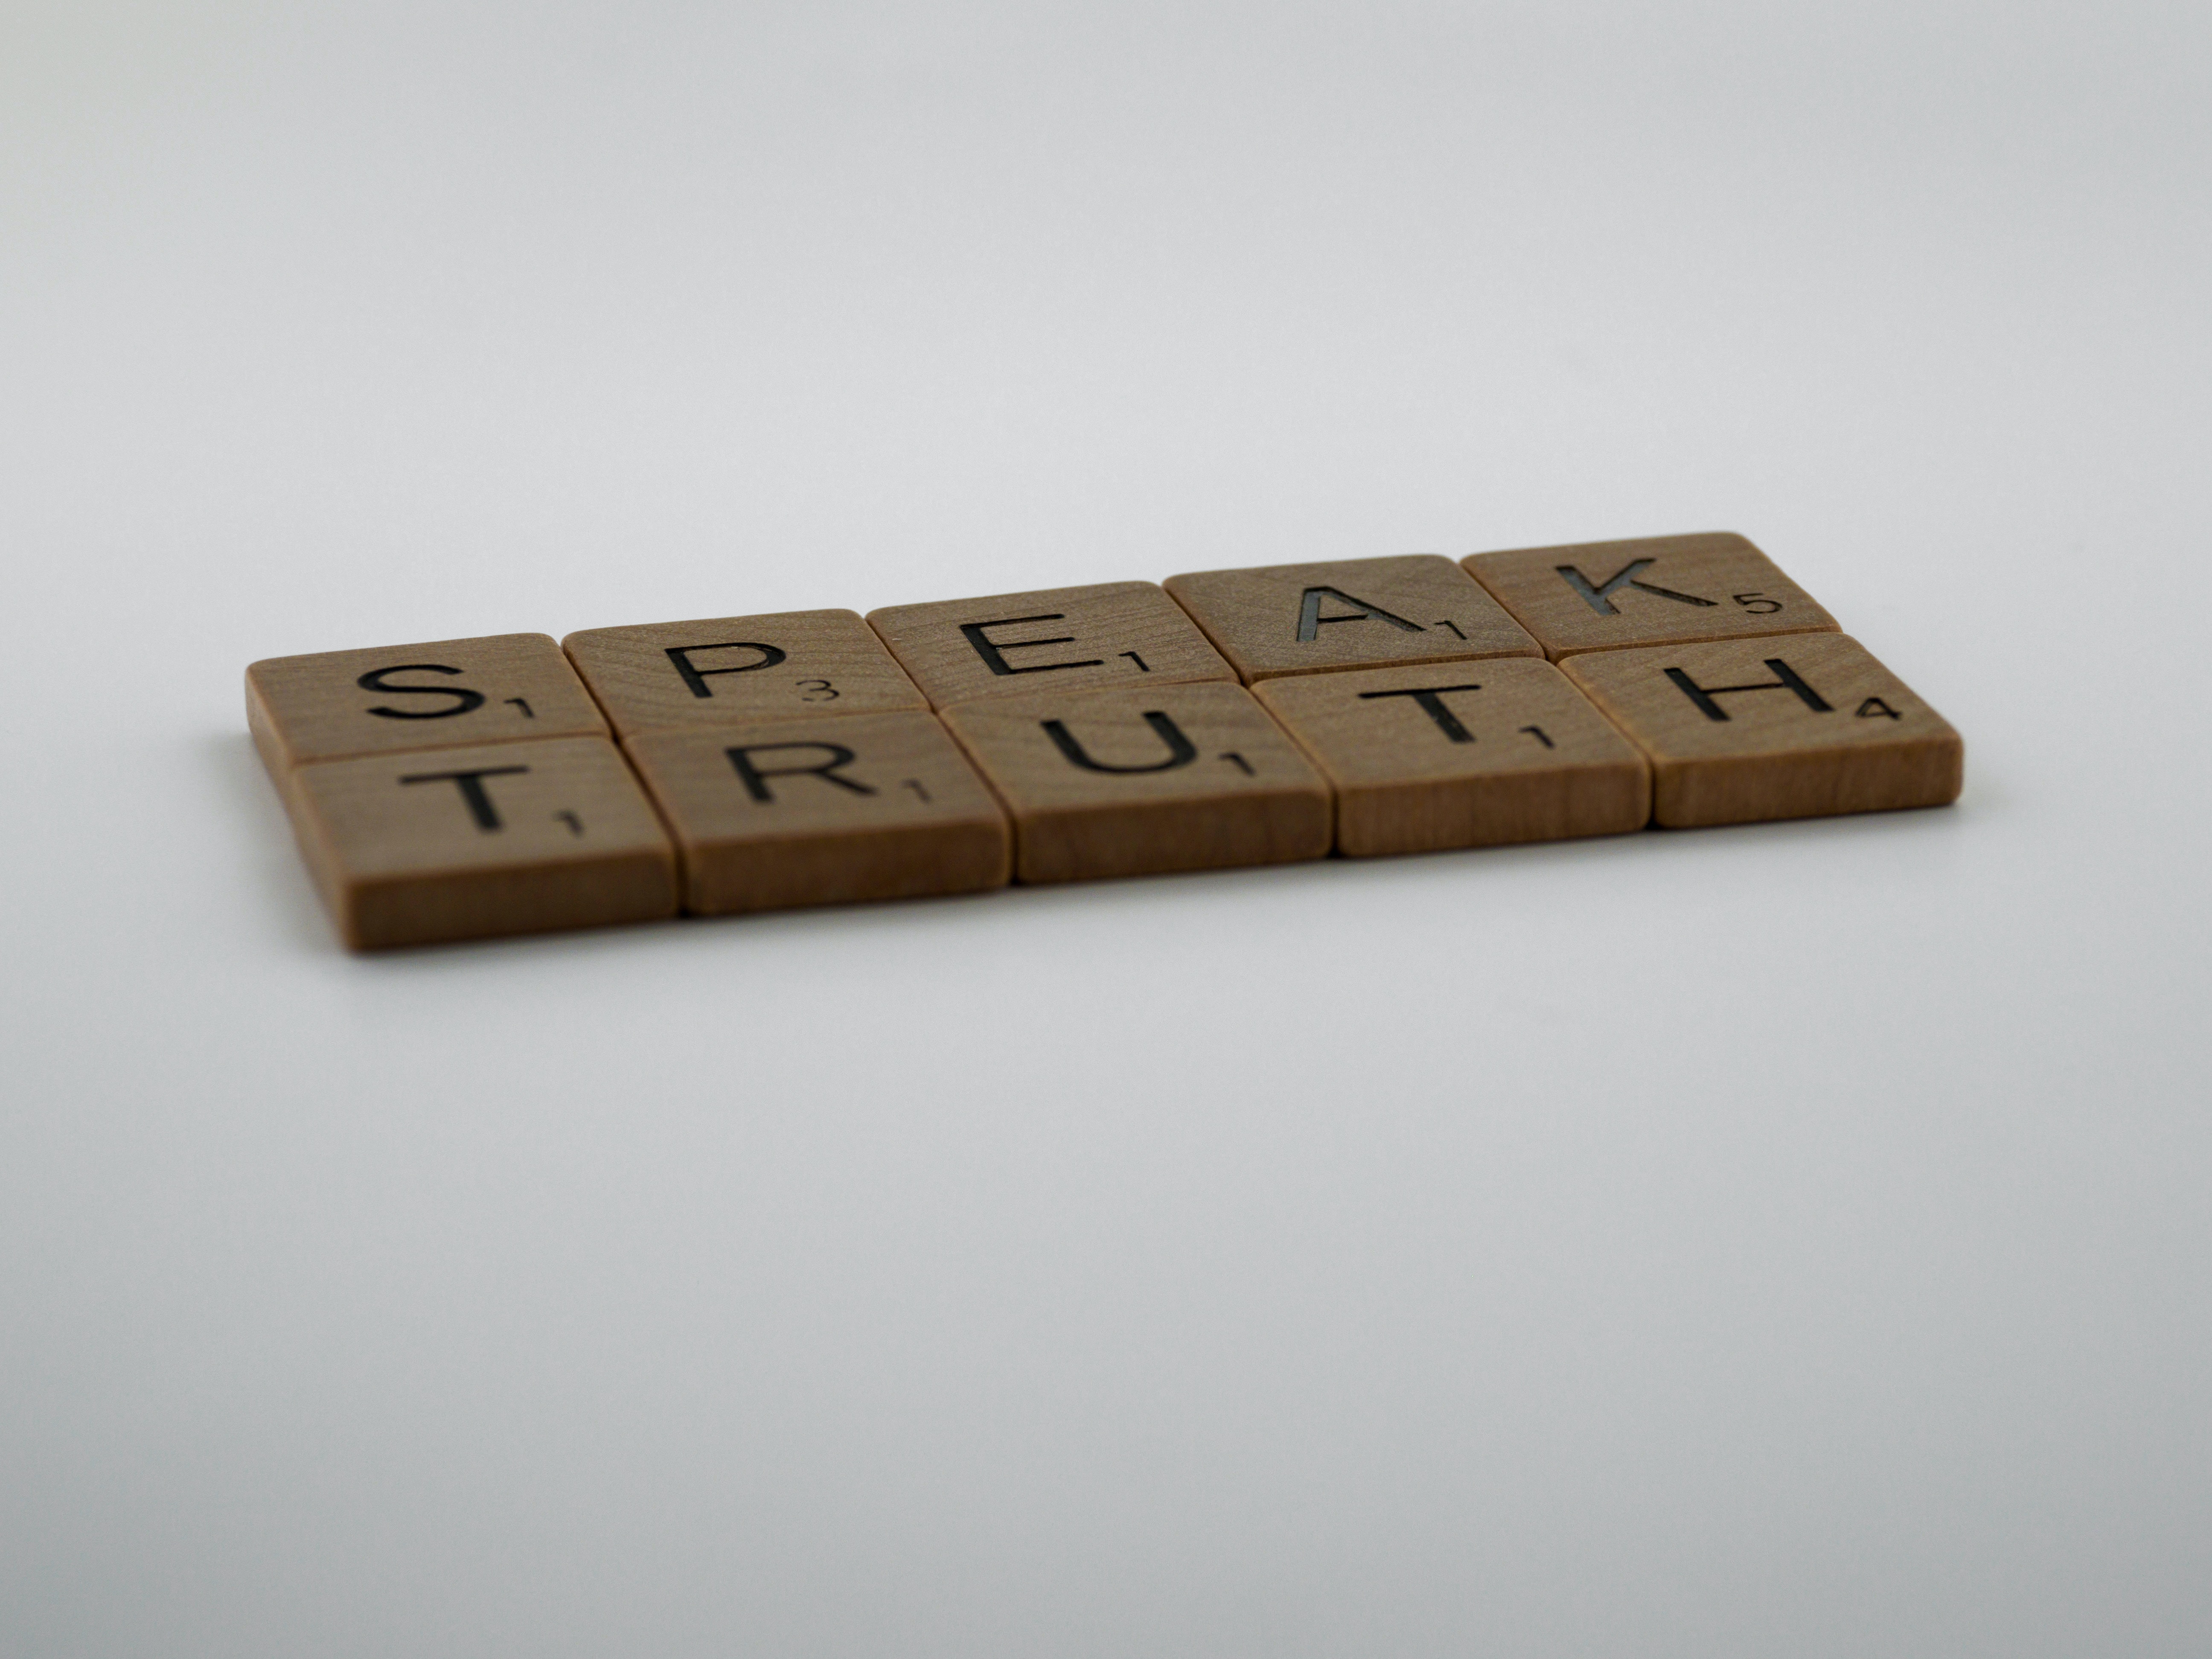 Scrabble pieces organized into the words 'Speak truth.' | Source: Unsplash